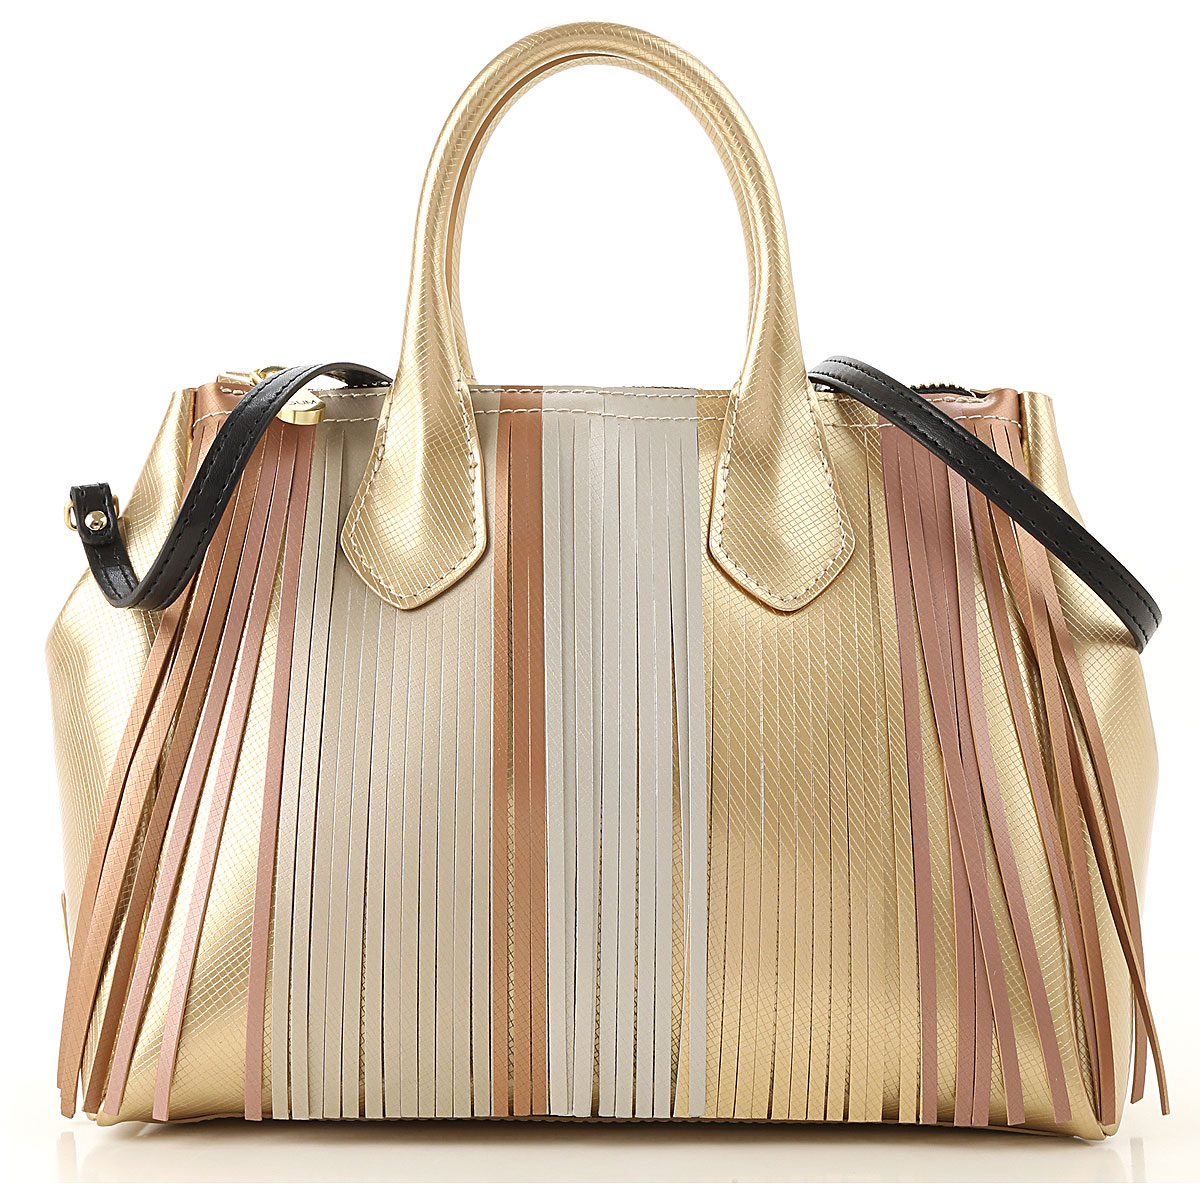 Handbags GUM Gianni Chiarini Design, Style code: bs3600tgumfrstr-79-